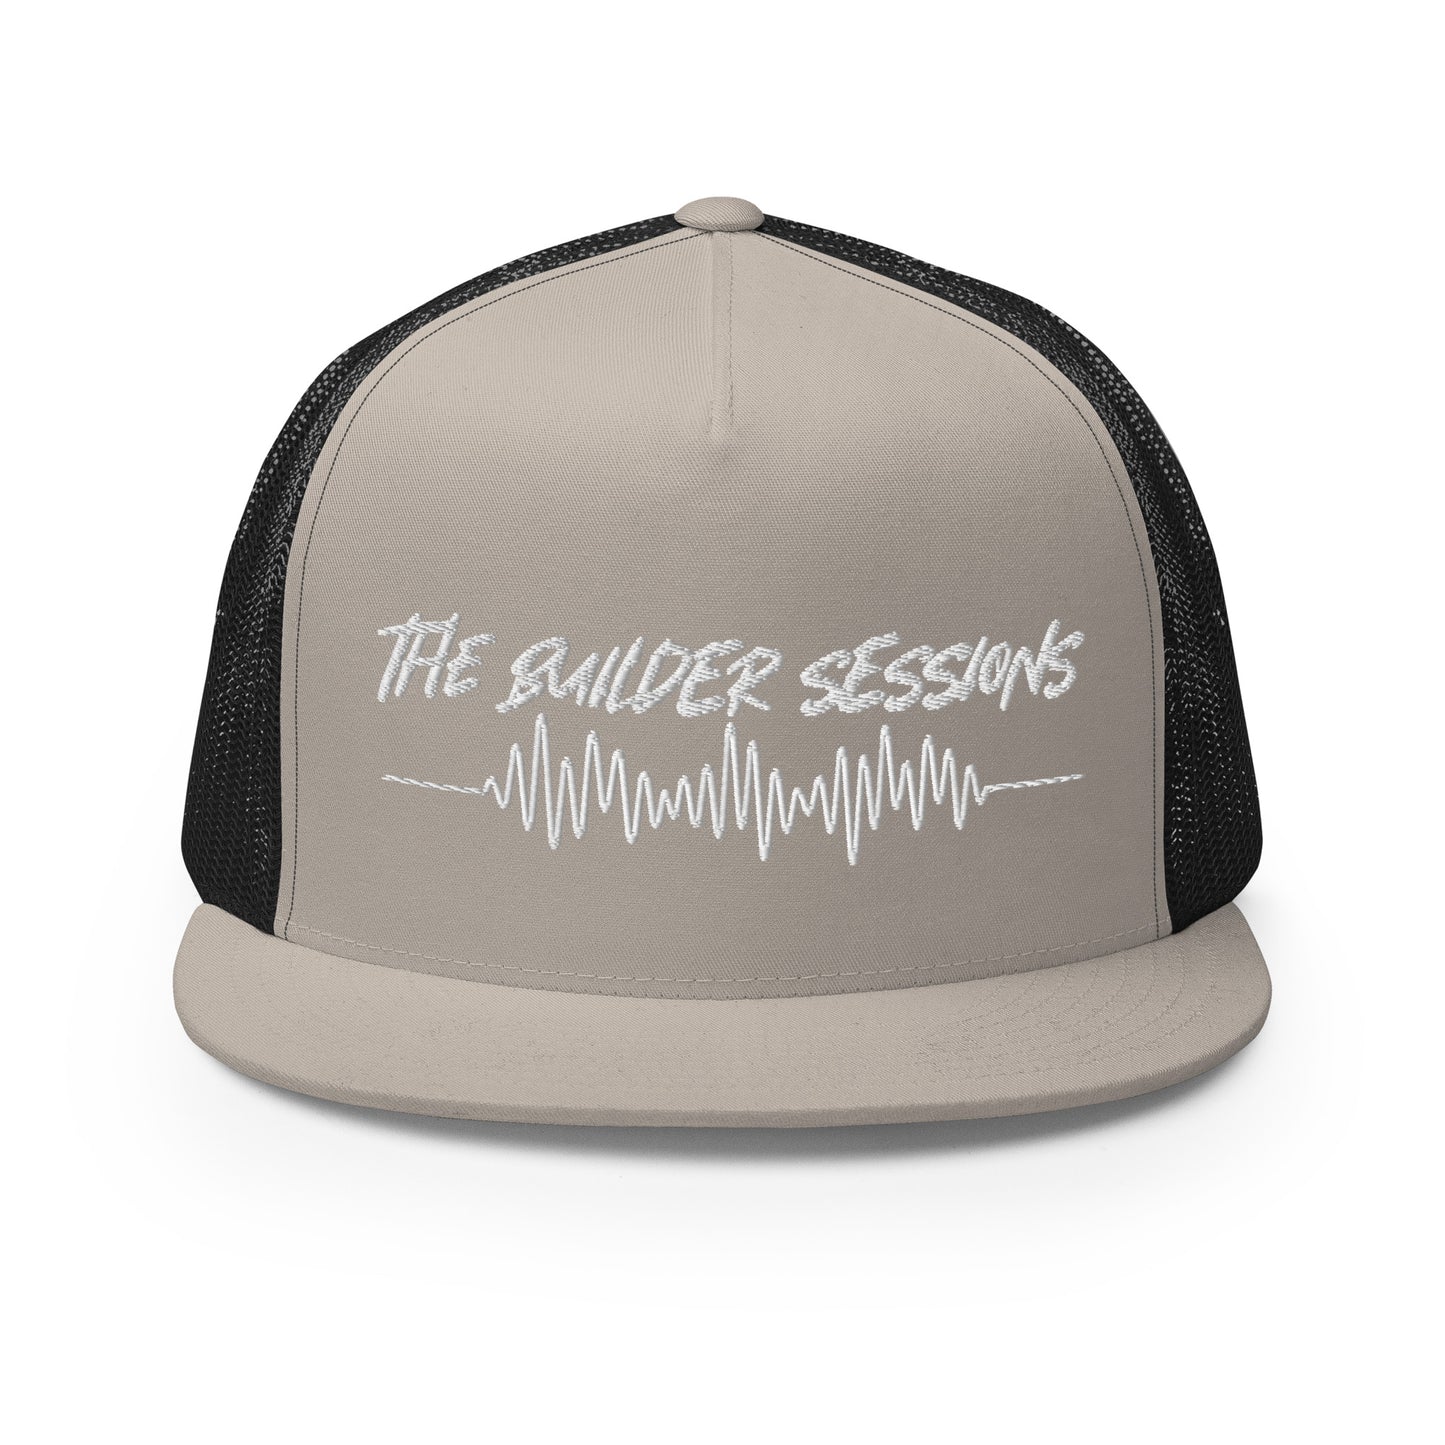 The Builder Sessions Trucker Cap